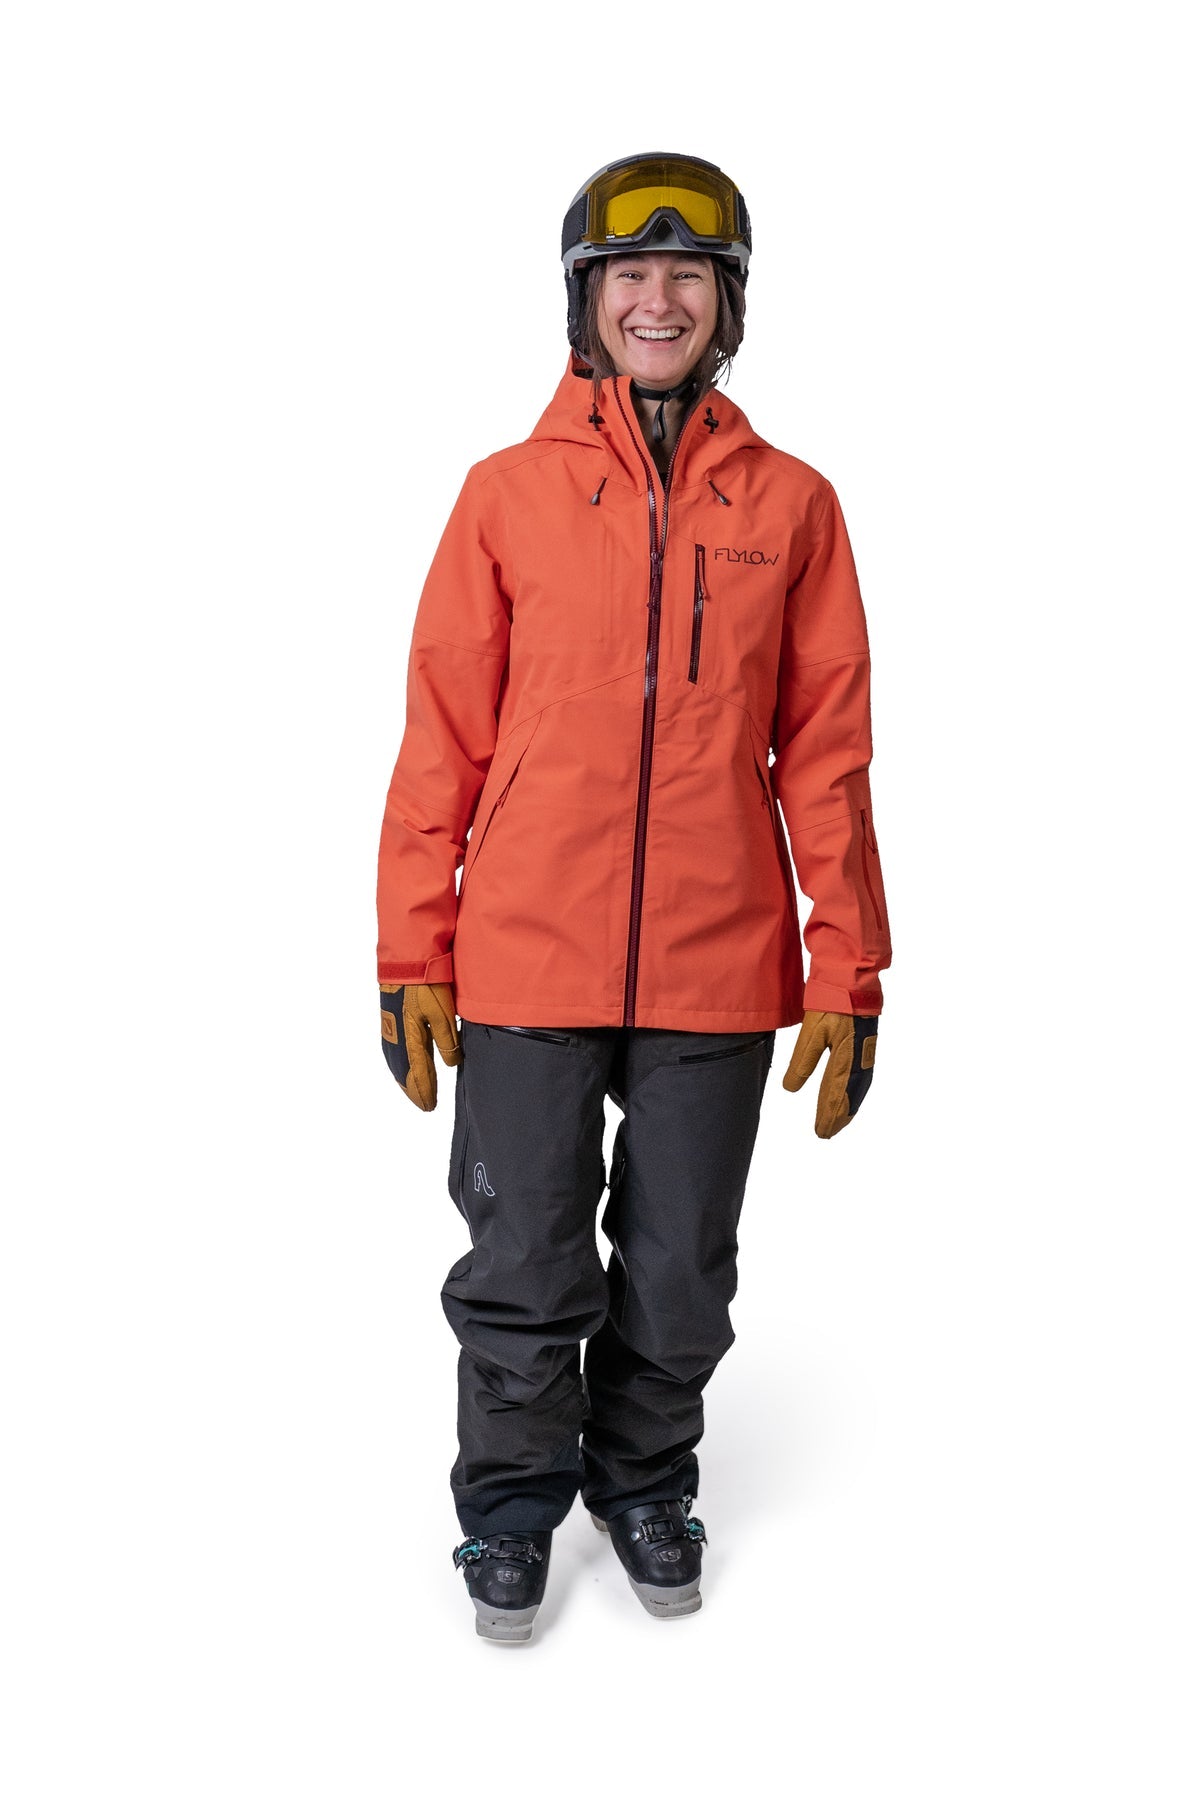 Billie Coat - Women's Backcountry Ski Jacket